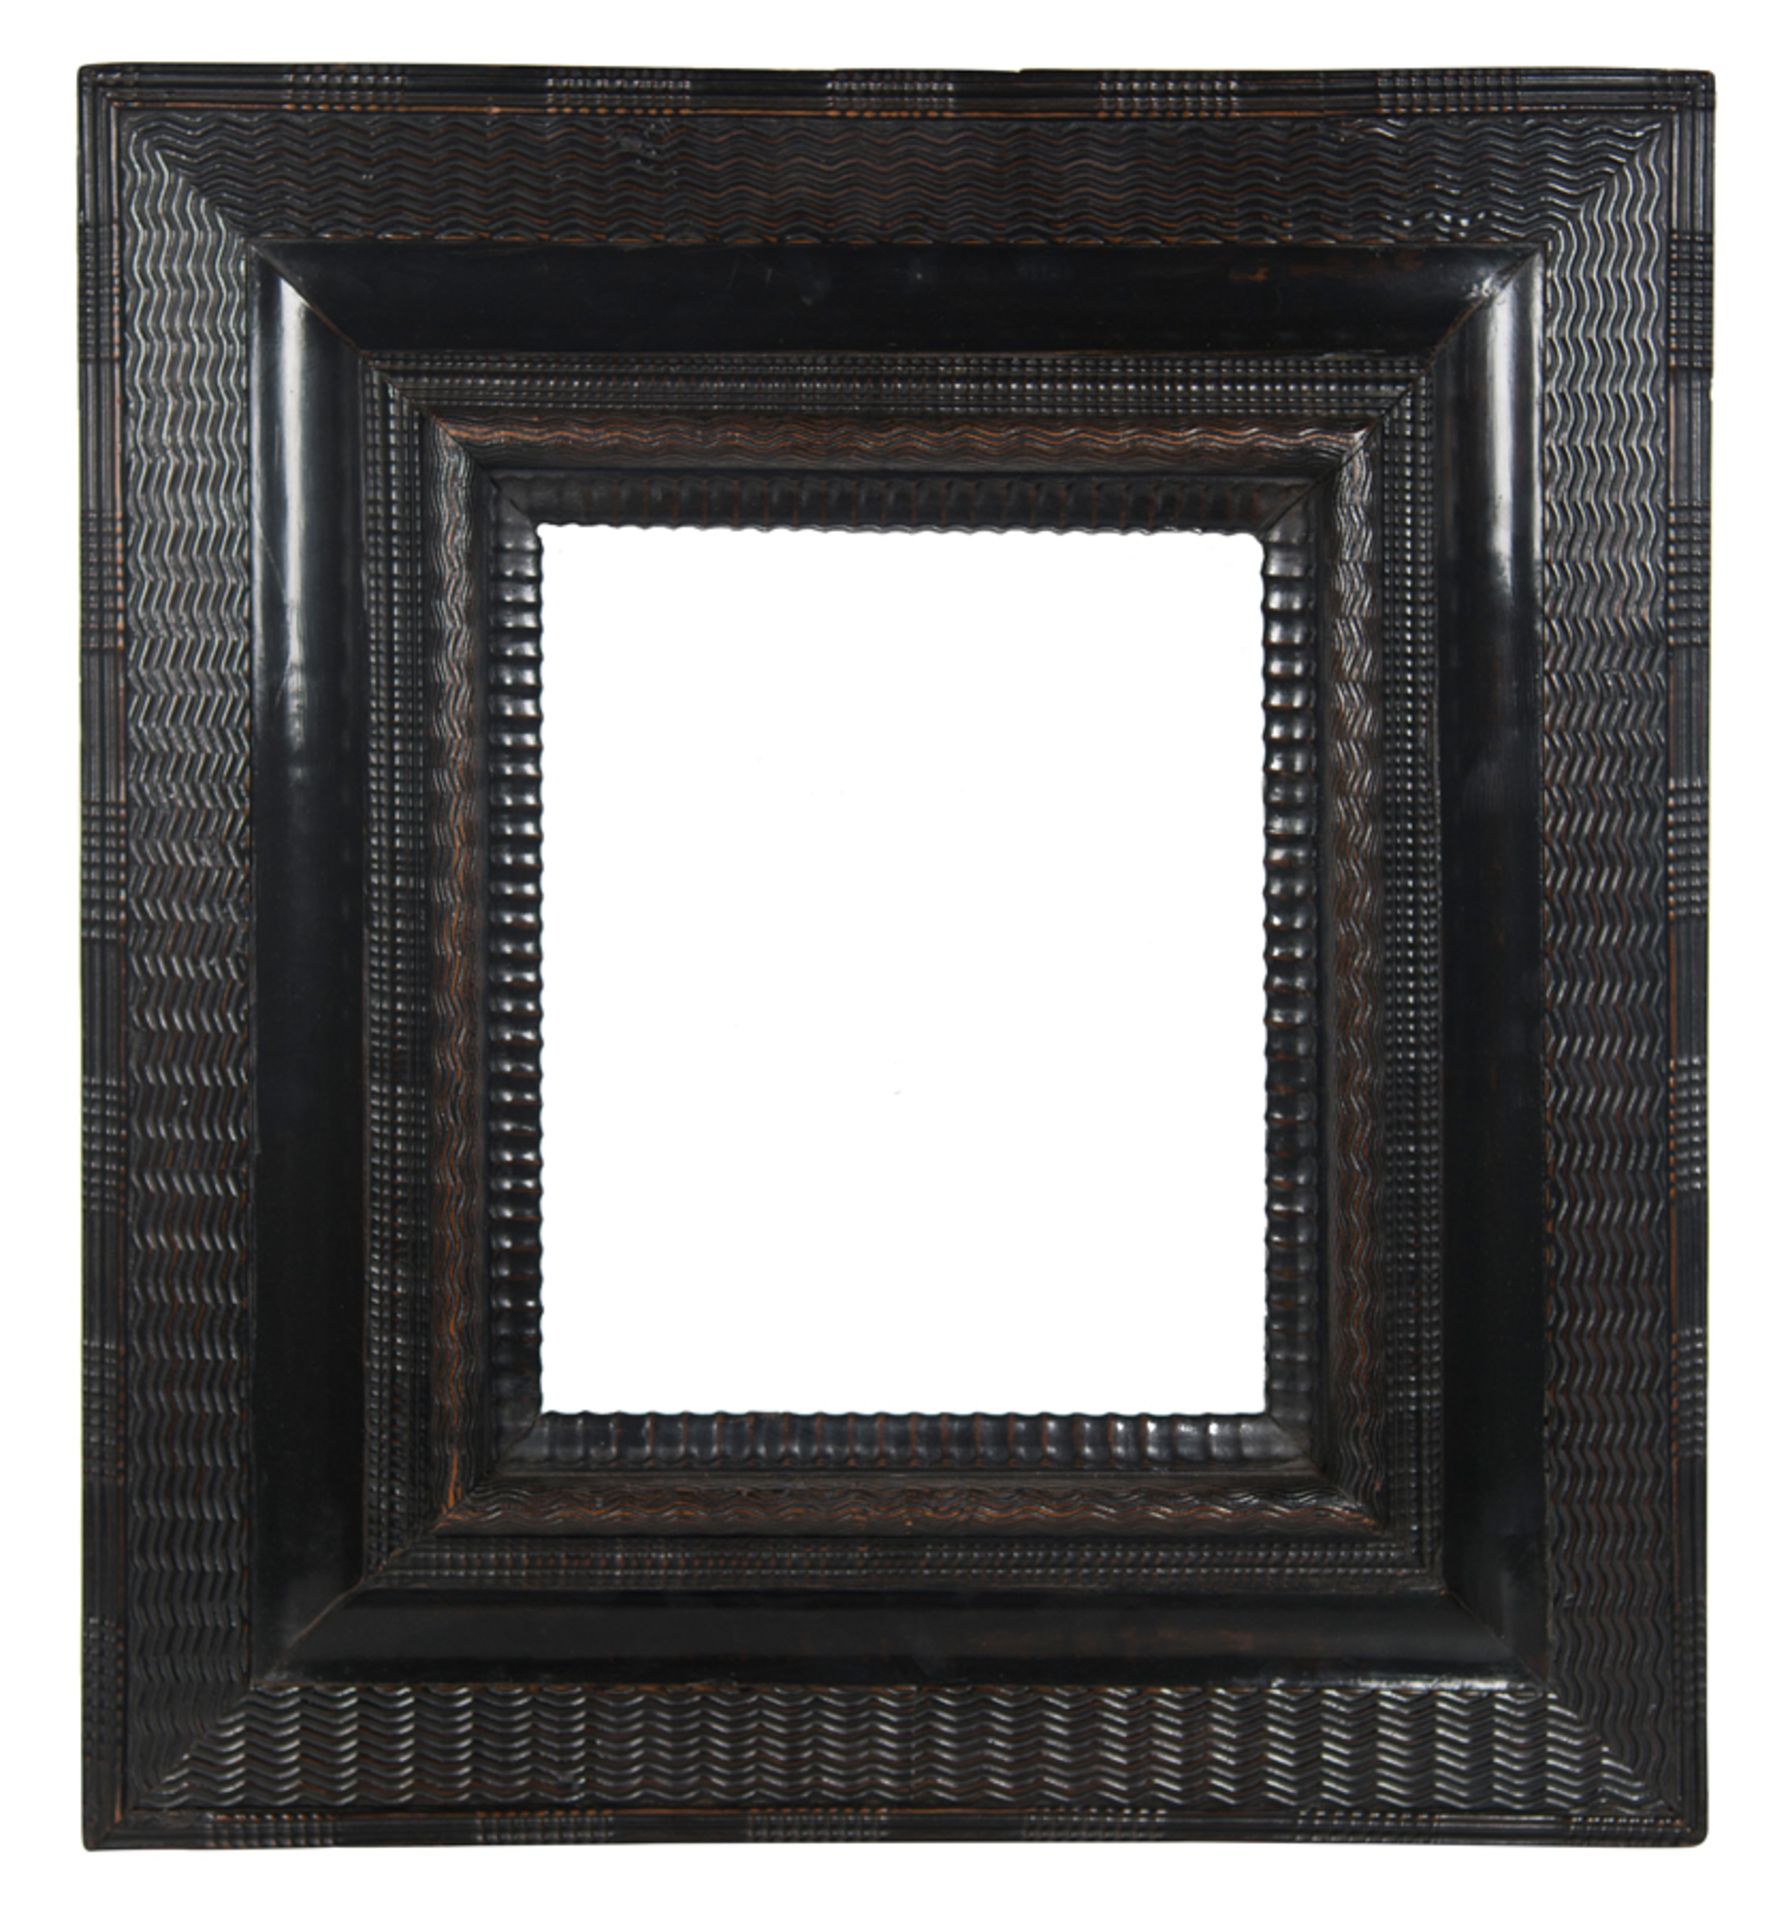 Carved ebony wooden frame. Netherlandish work. 17th- 18th century.